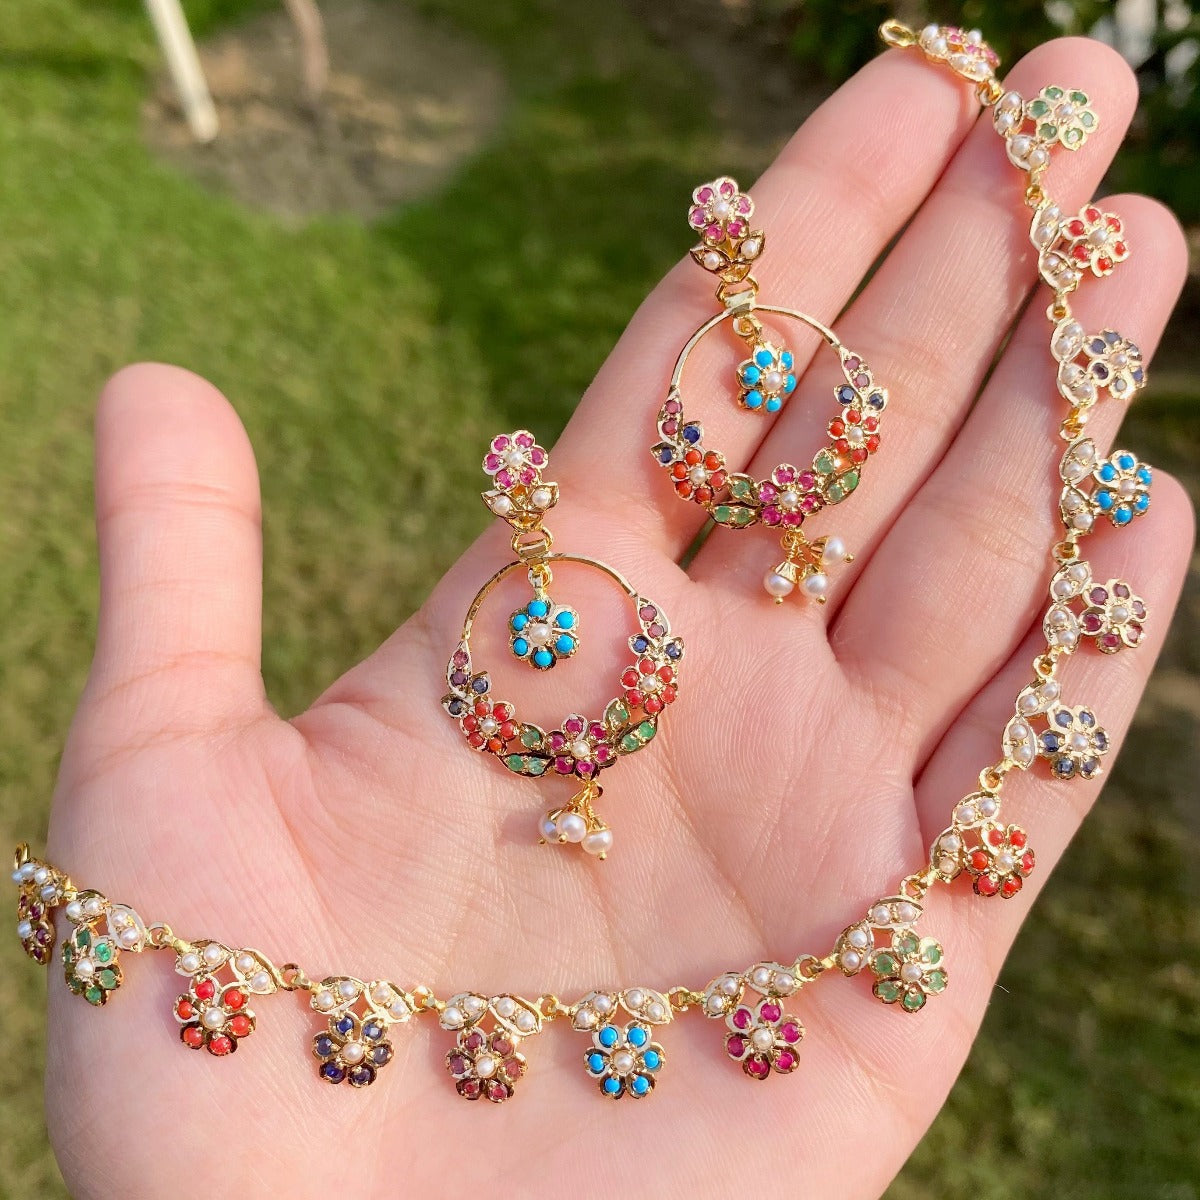 22 carat gold navrattan necklace with chandbali under 75000